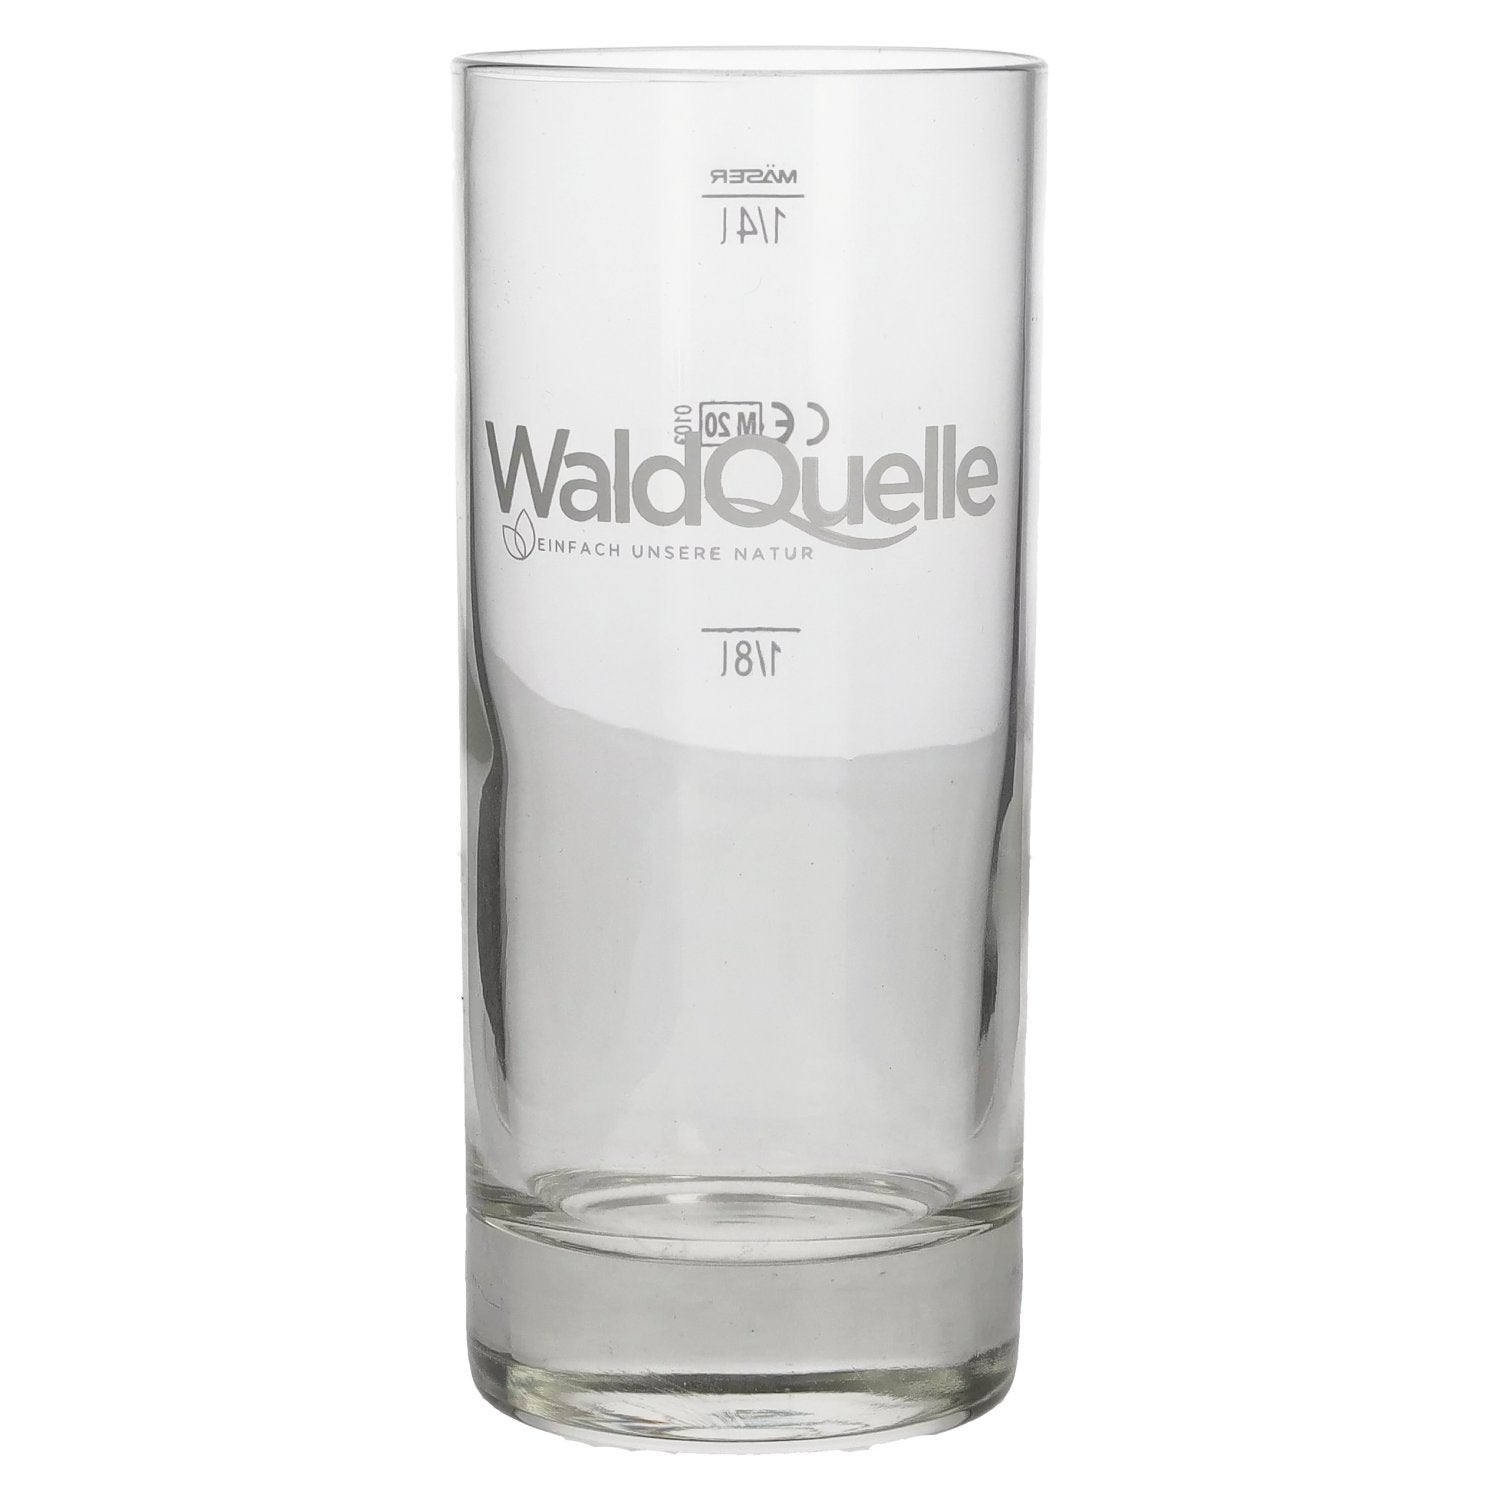 Waldquelle glass 0,25l with calibration